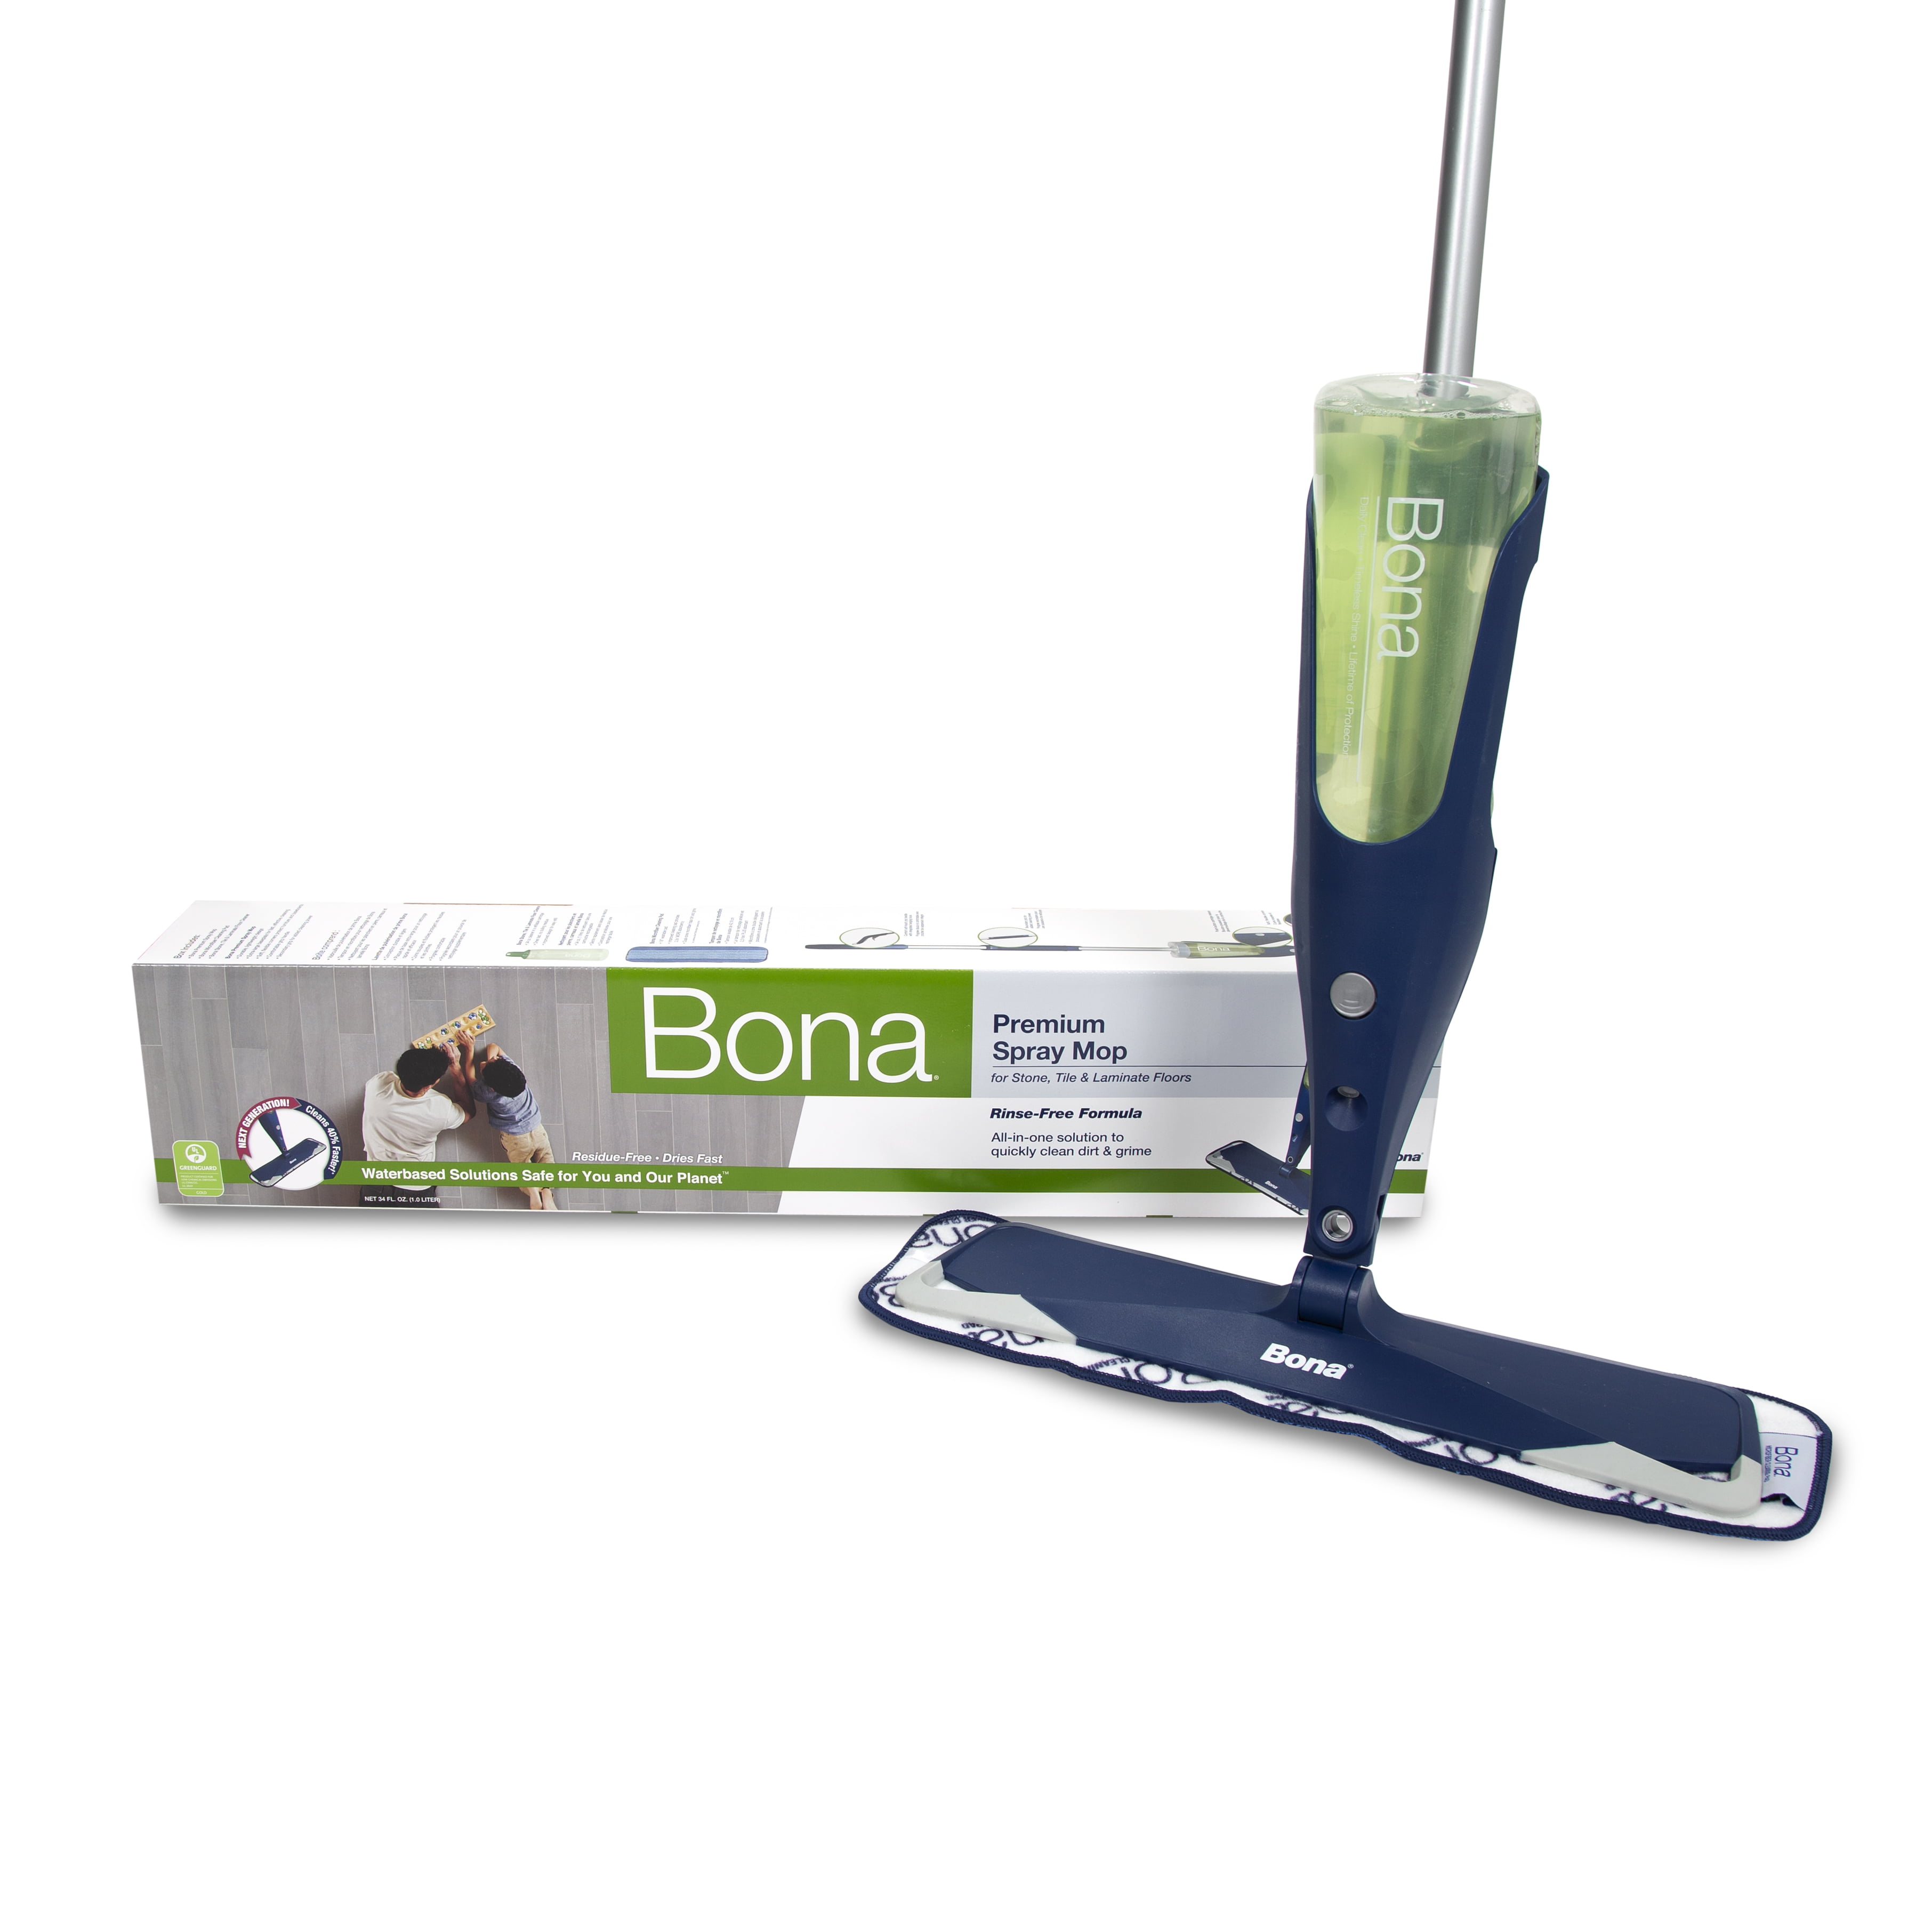 Bona Premium Spray Mop For Hard Surface, Bona Premium Spray Mop For Stone Tile & Laminate Floors